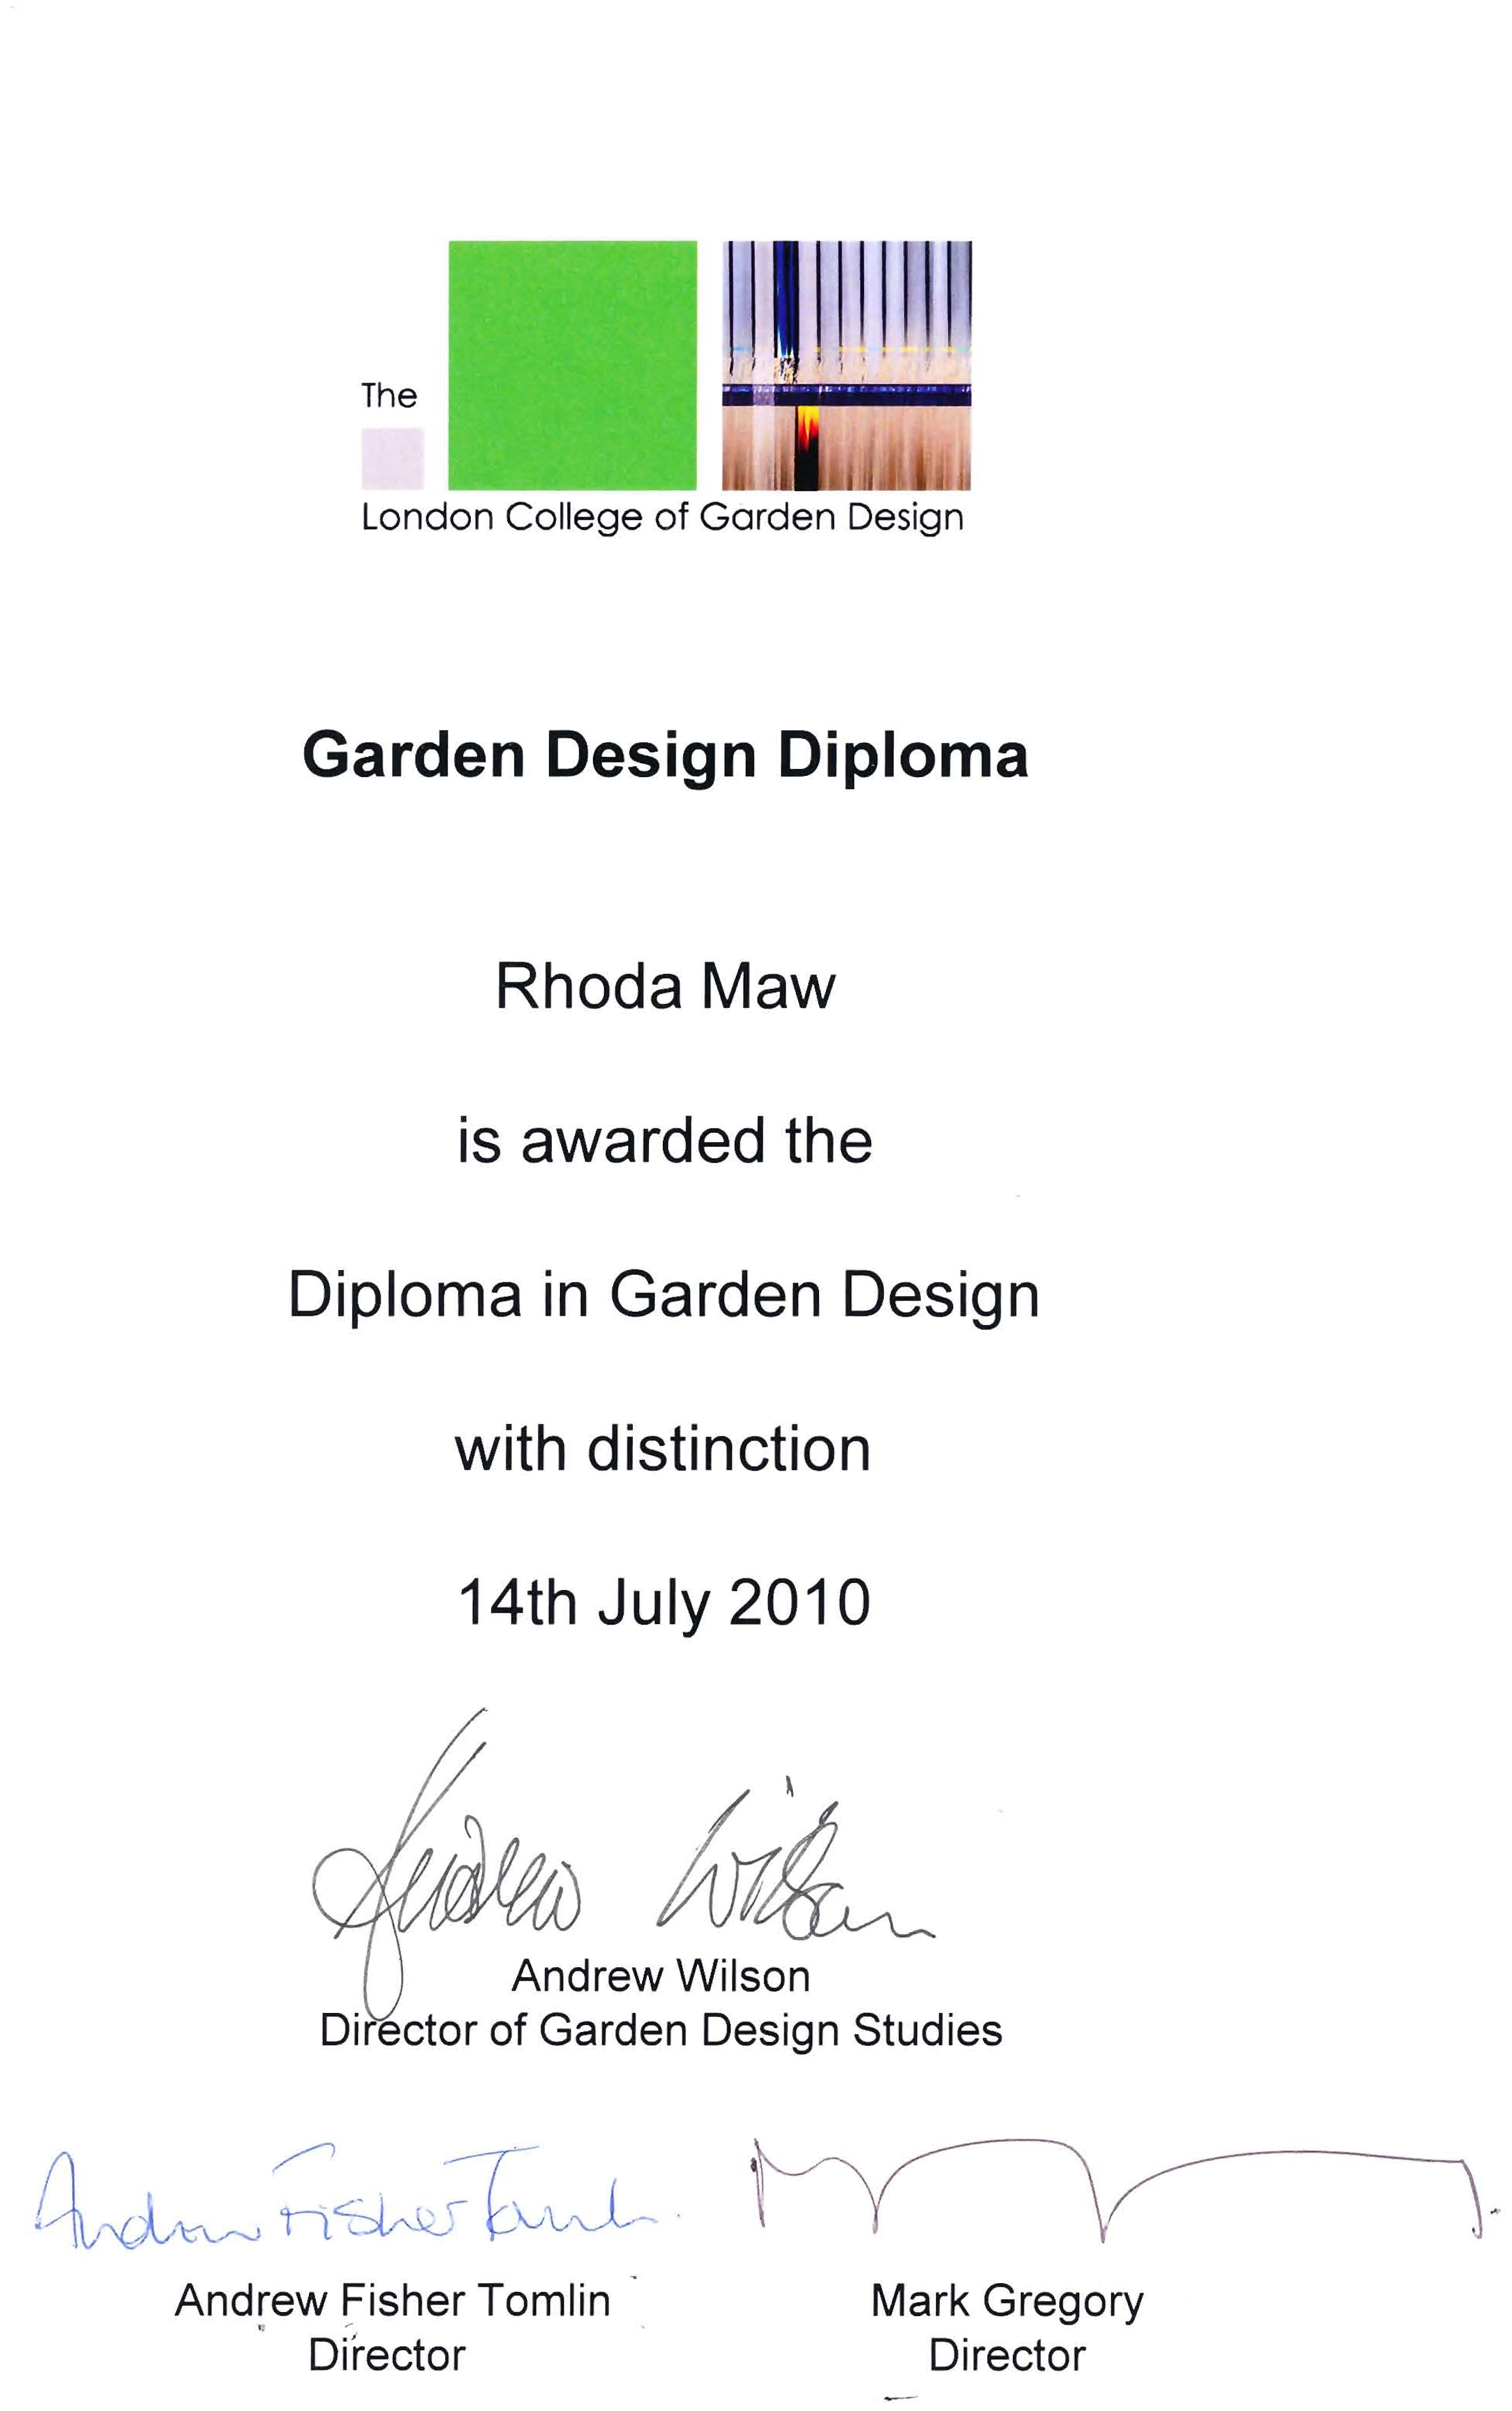 Professional garden Designer Rhoda Maw